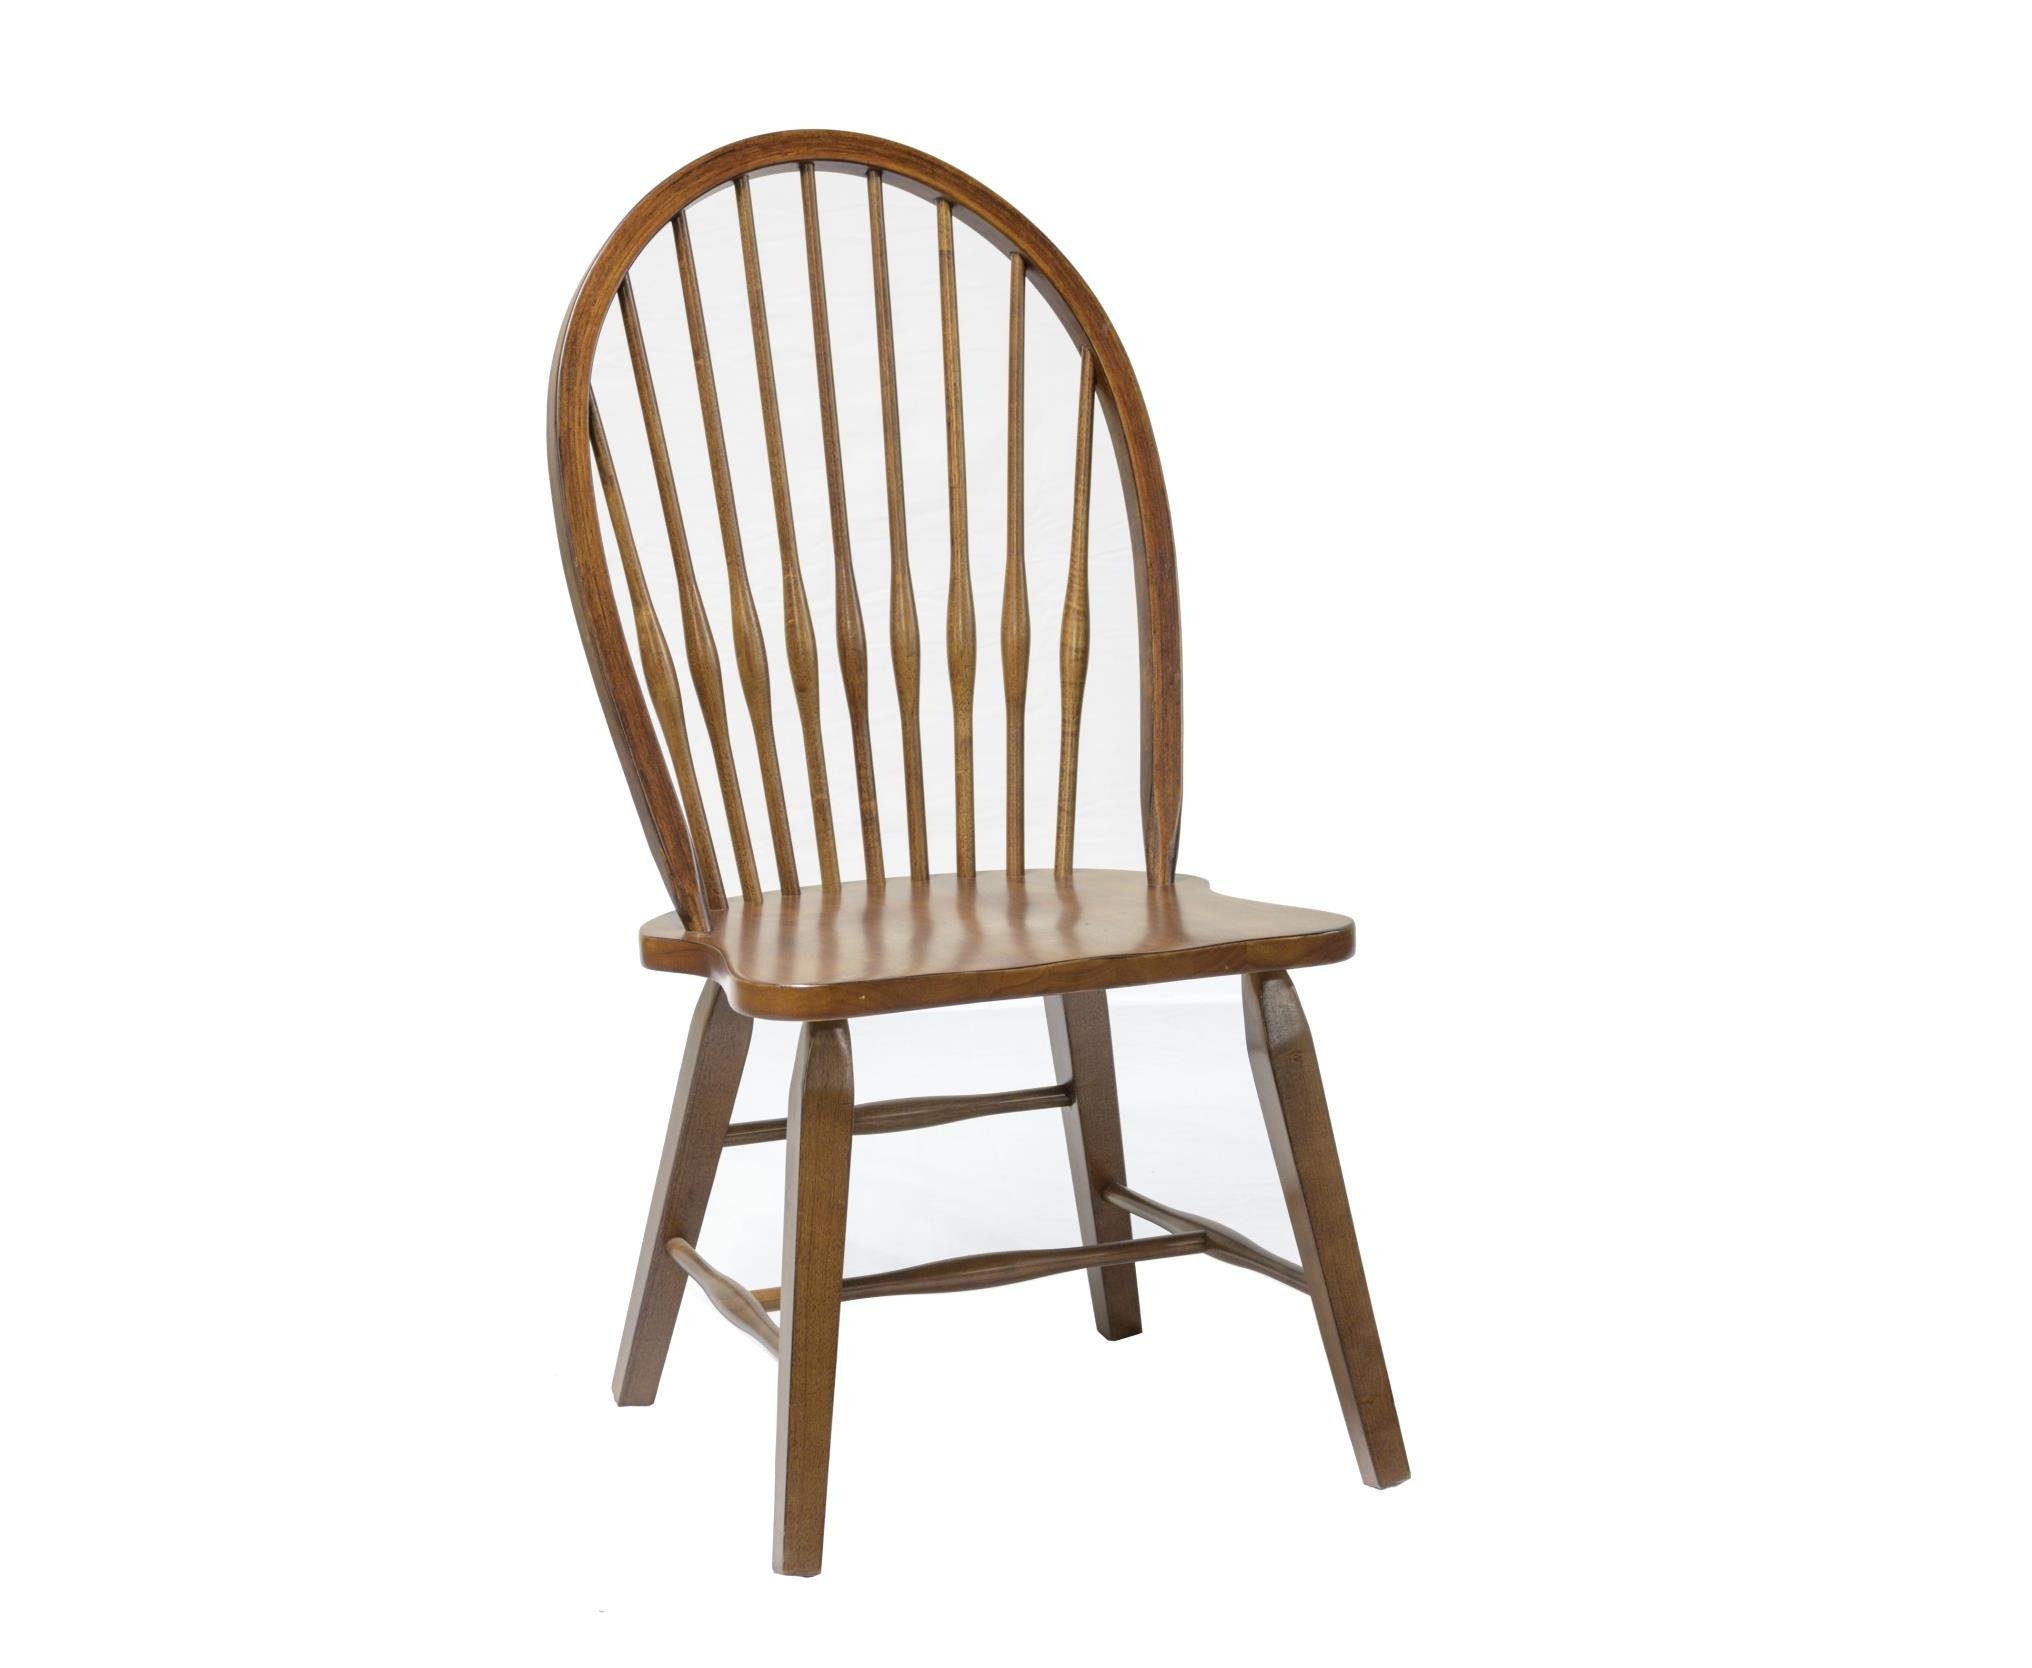 20" X 21.5" X 41" Tobacco Hardwood Summerwood Side Chair